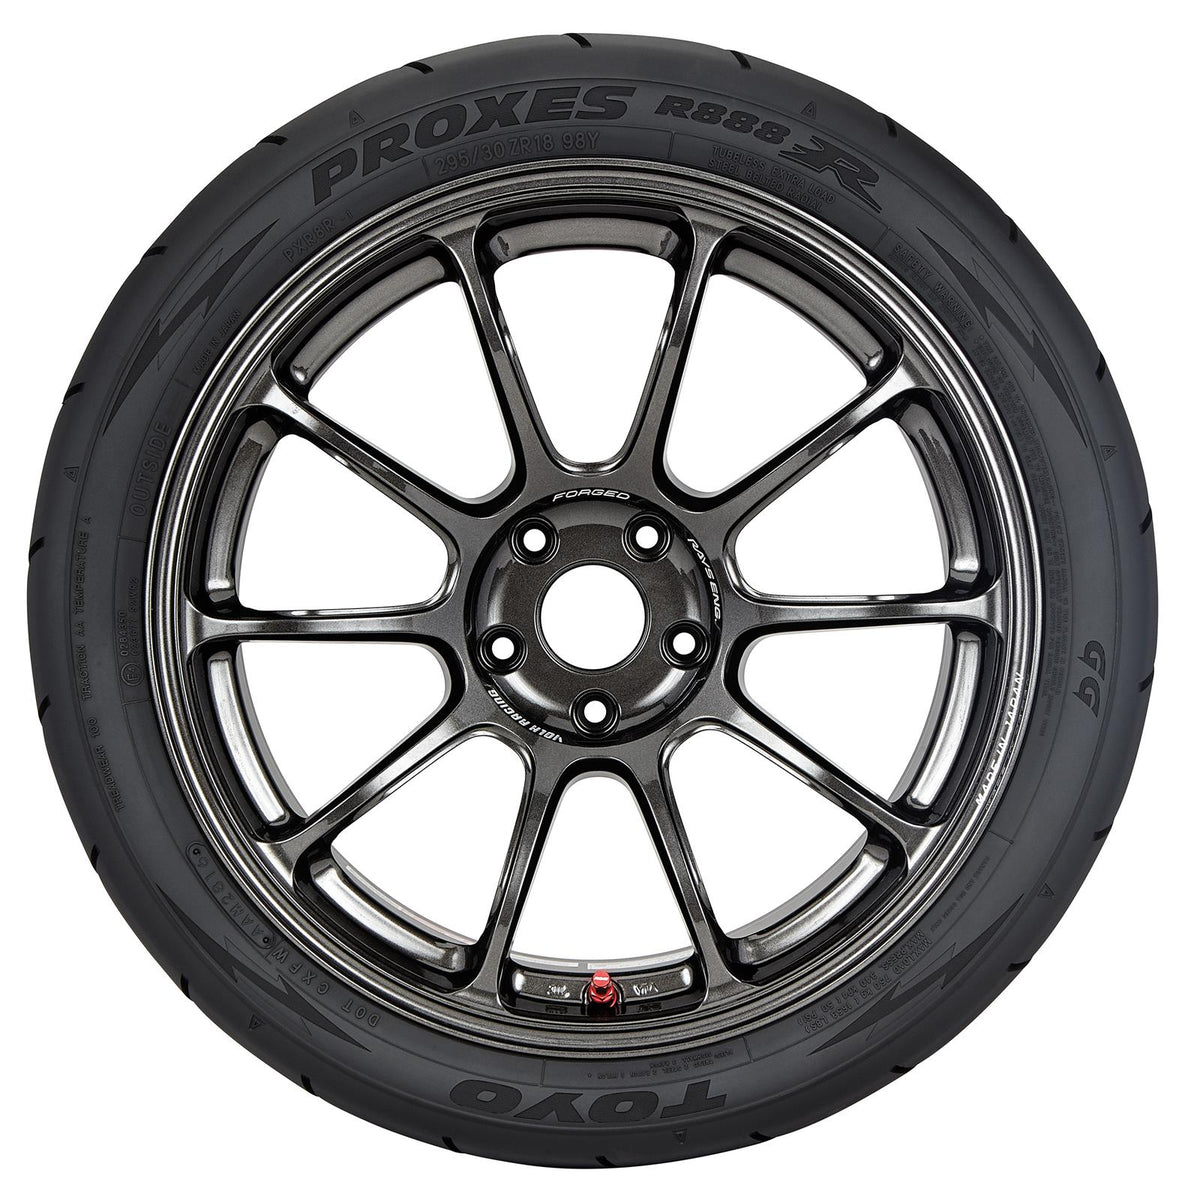 Corvette Toyo Proxes R888R Tires